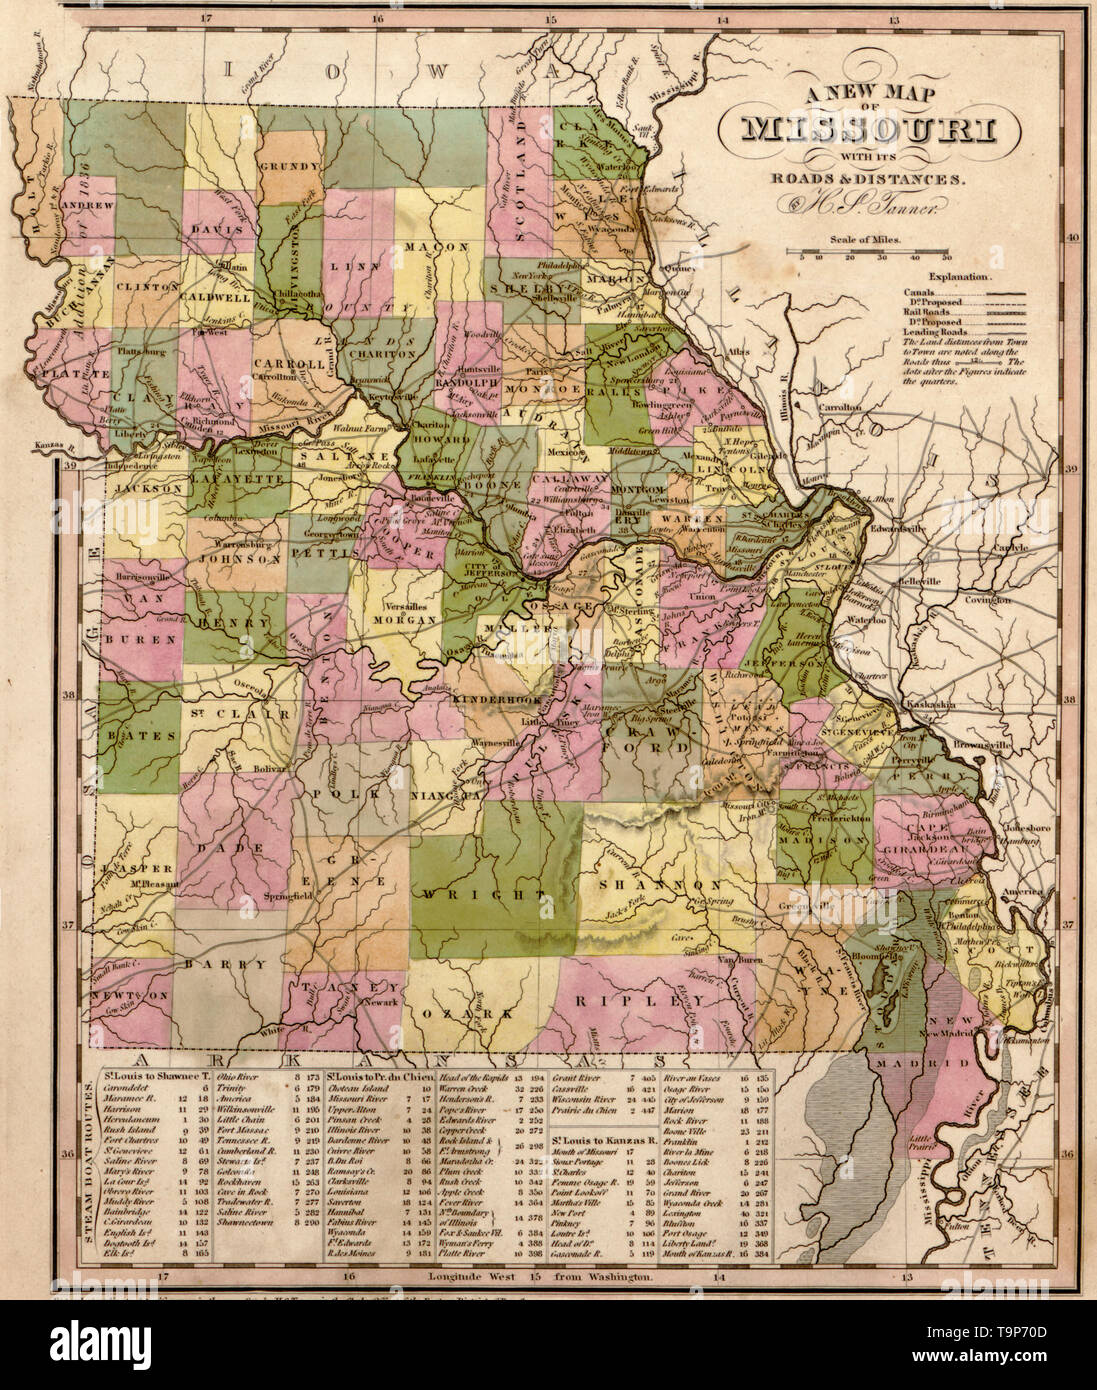 Map of Missouri, 1844 Stock Photo